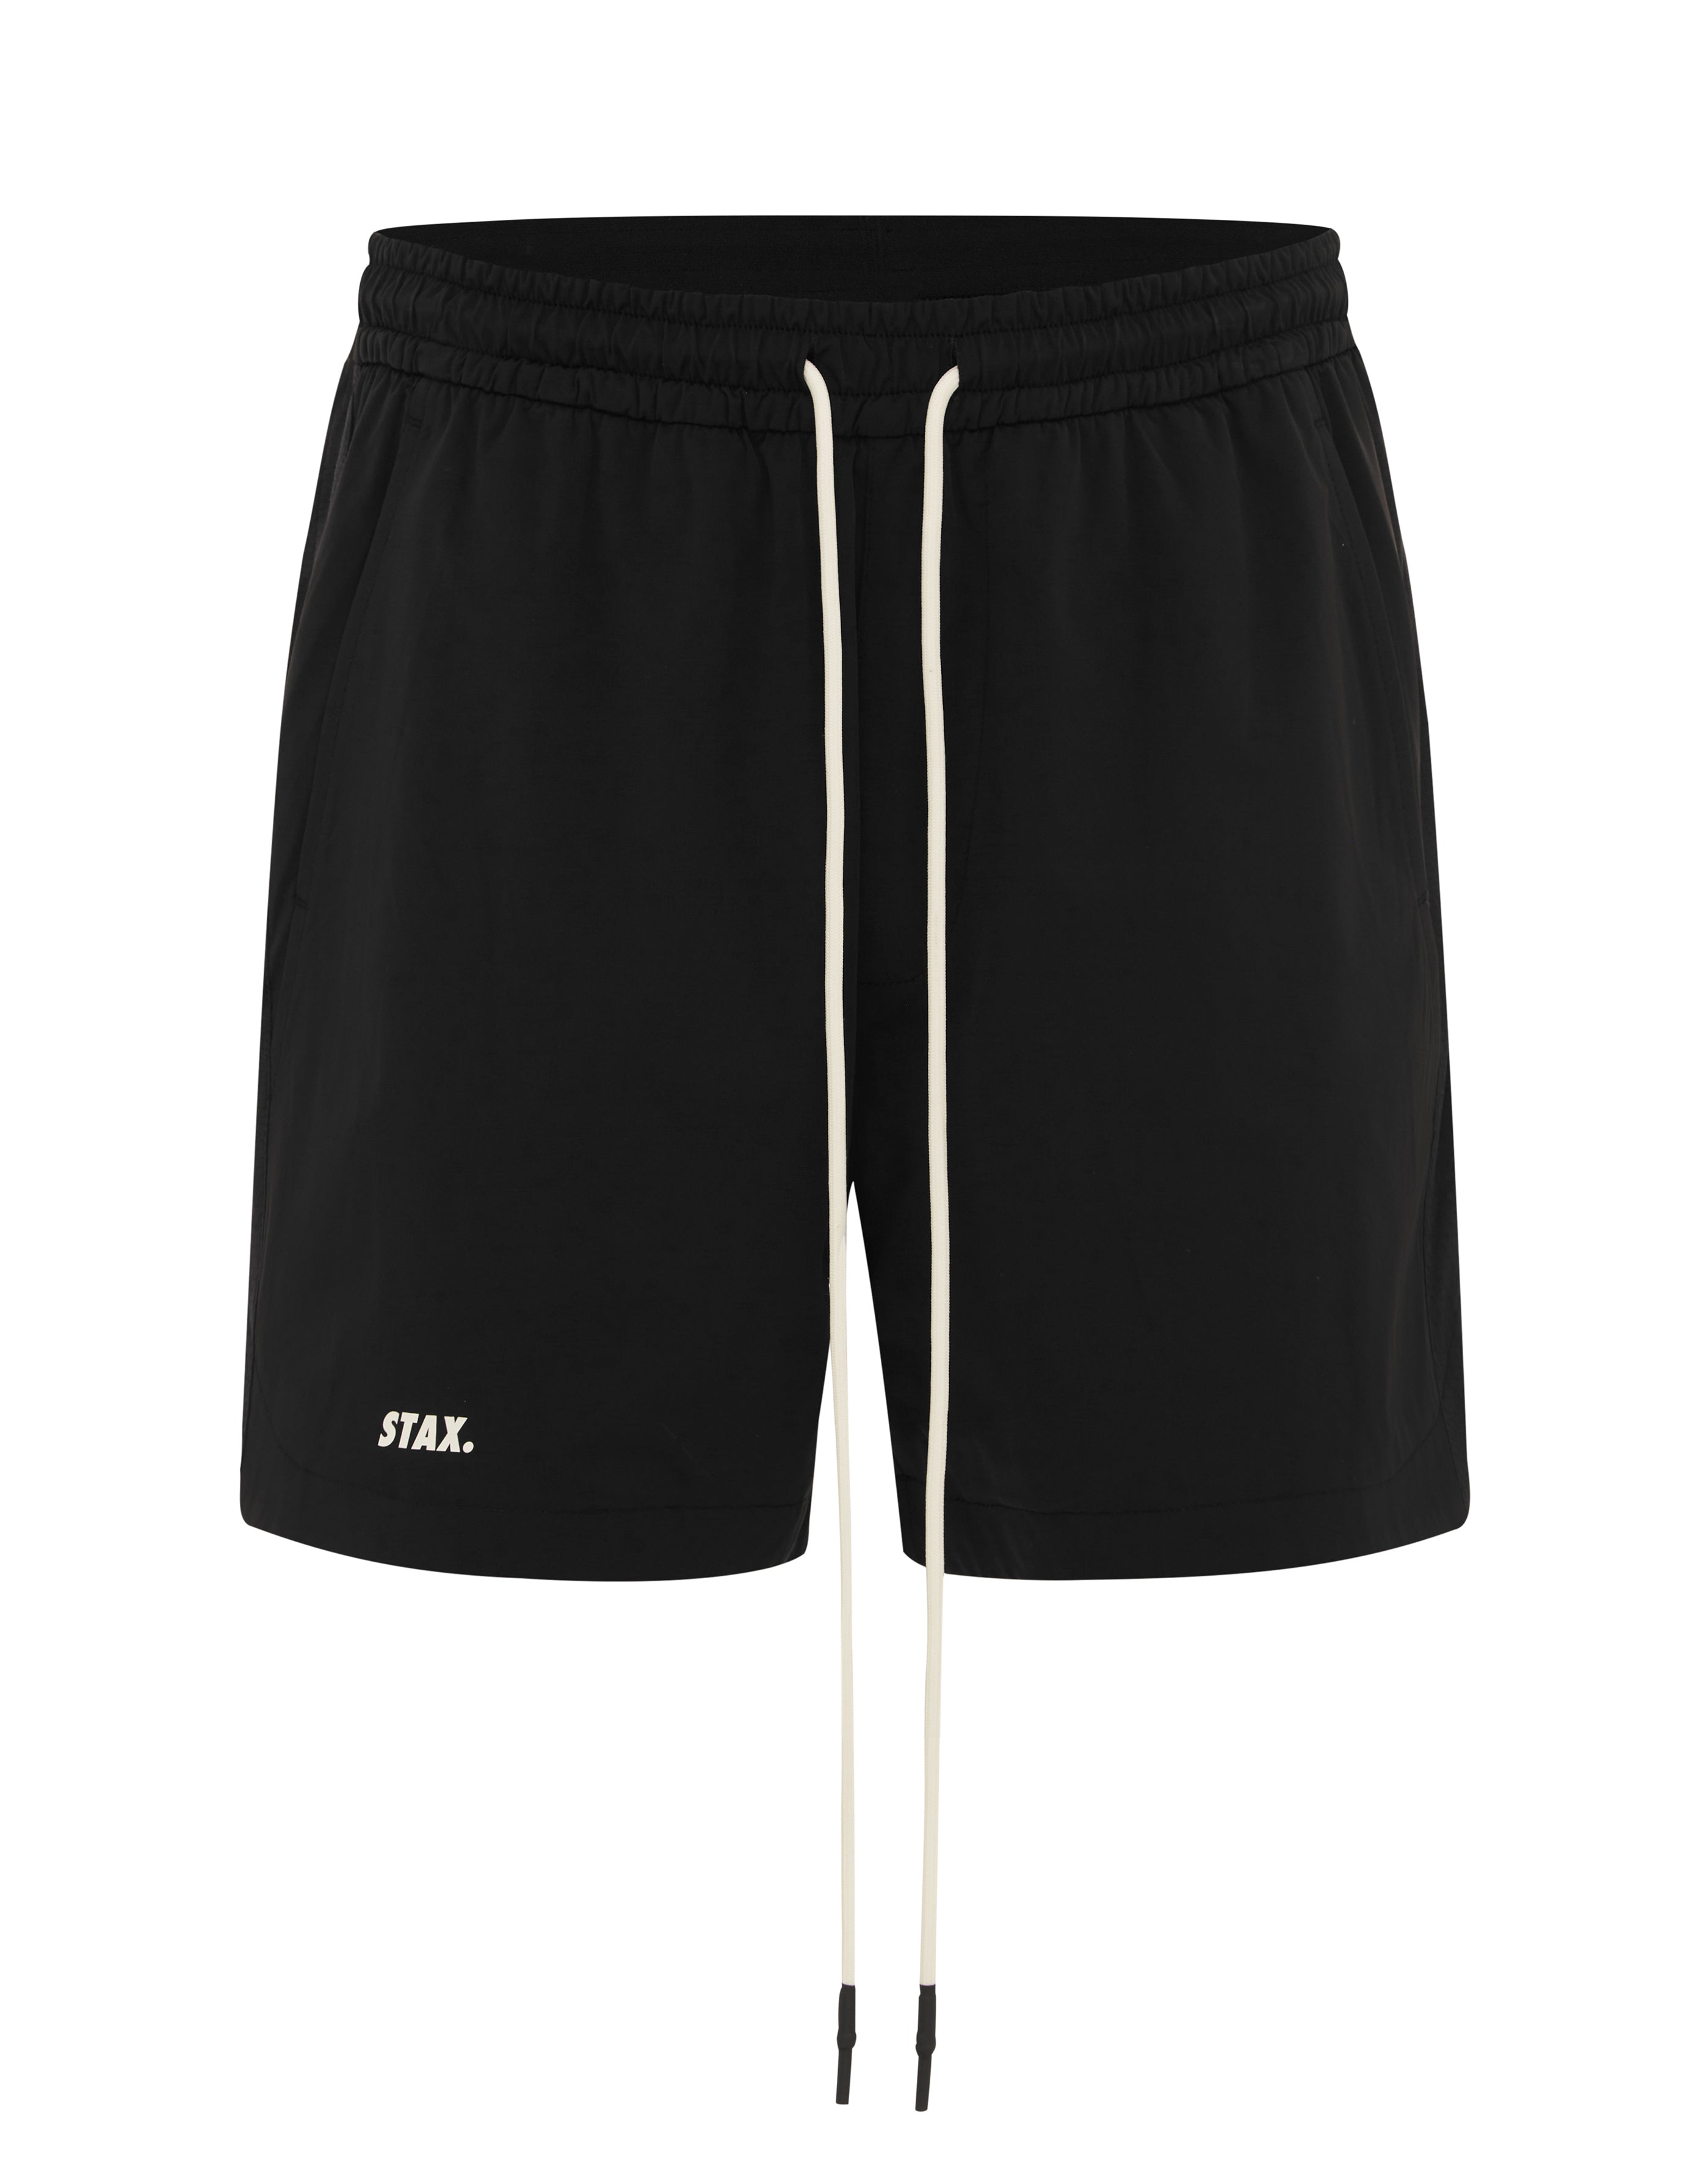 mens-sport-nylon-shorts-black